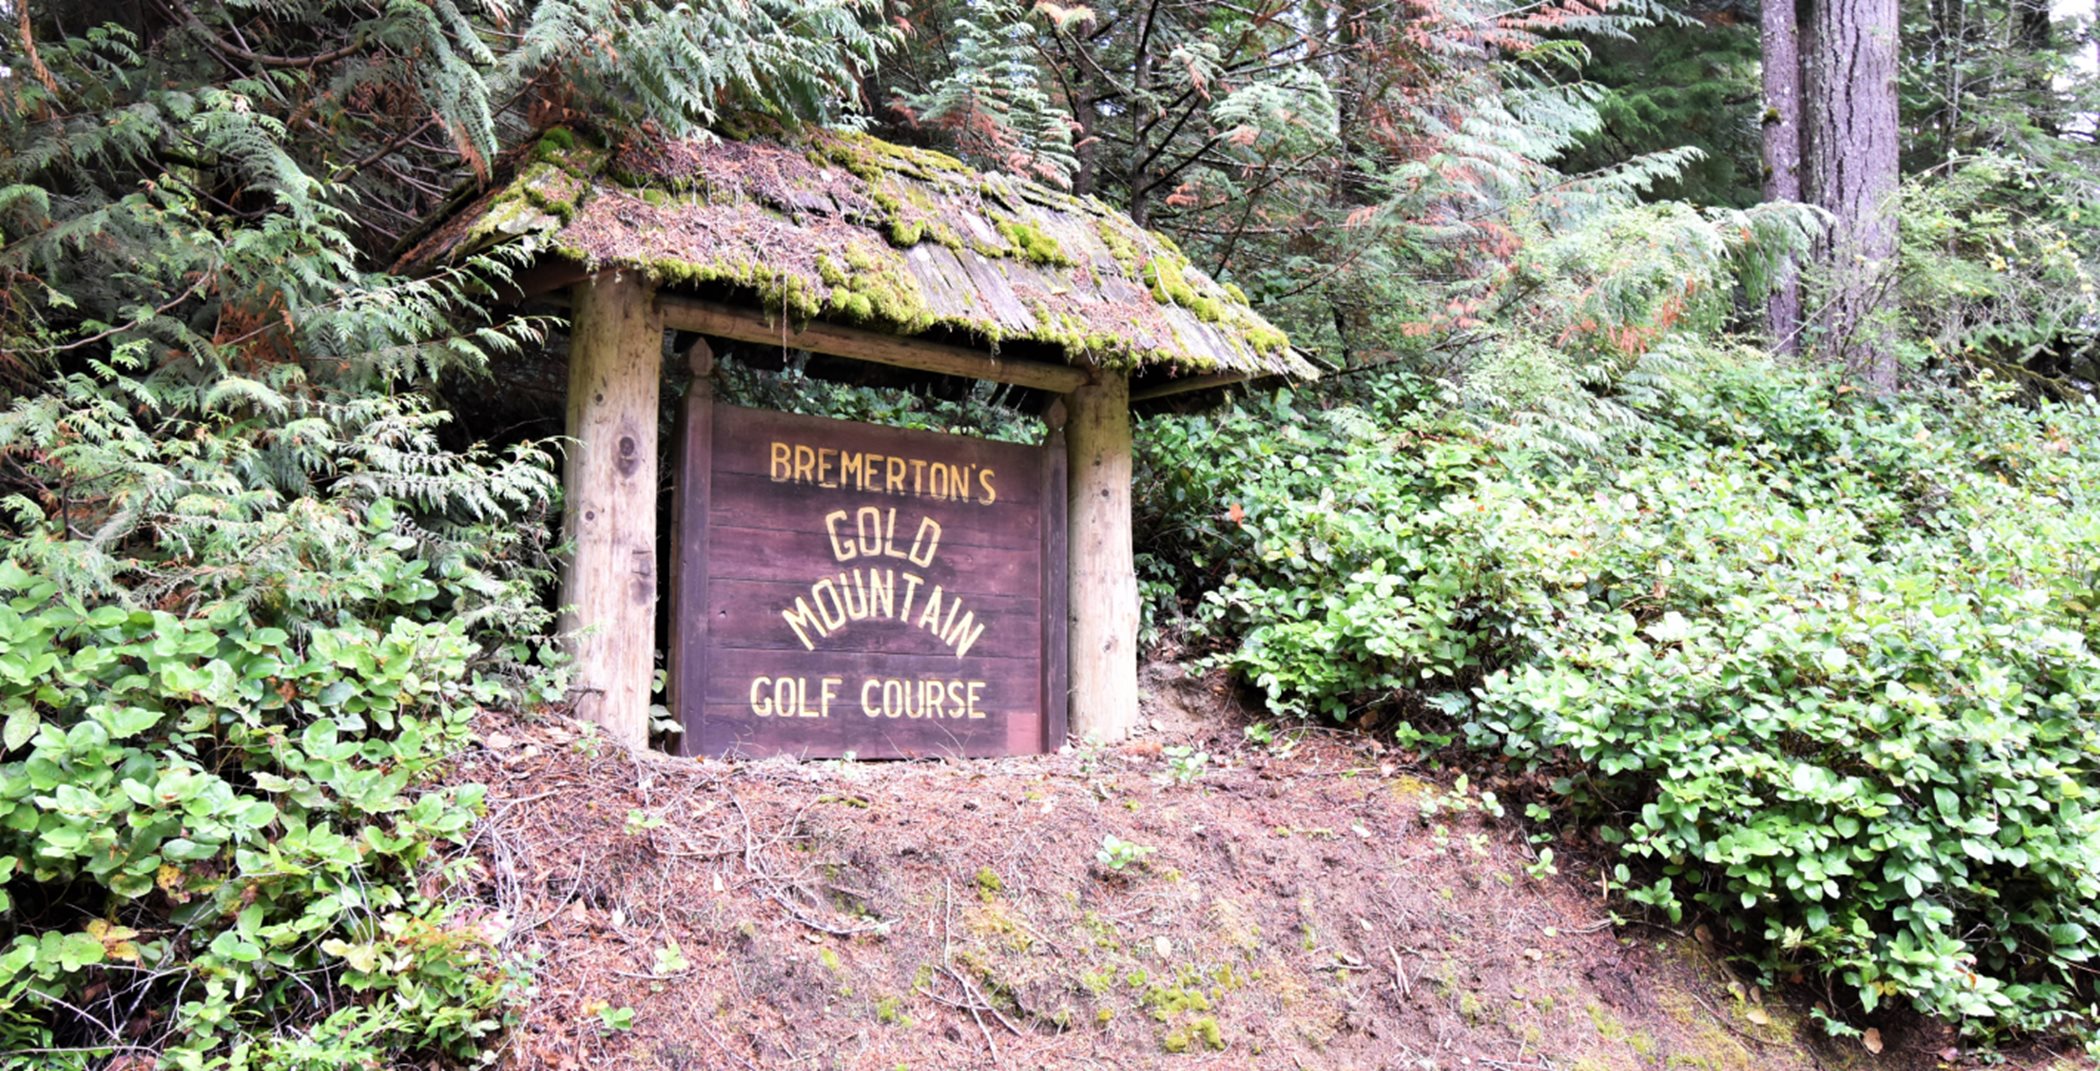 Sign for Bremerton's Gold Mountain Golf Course